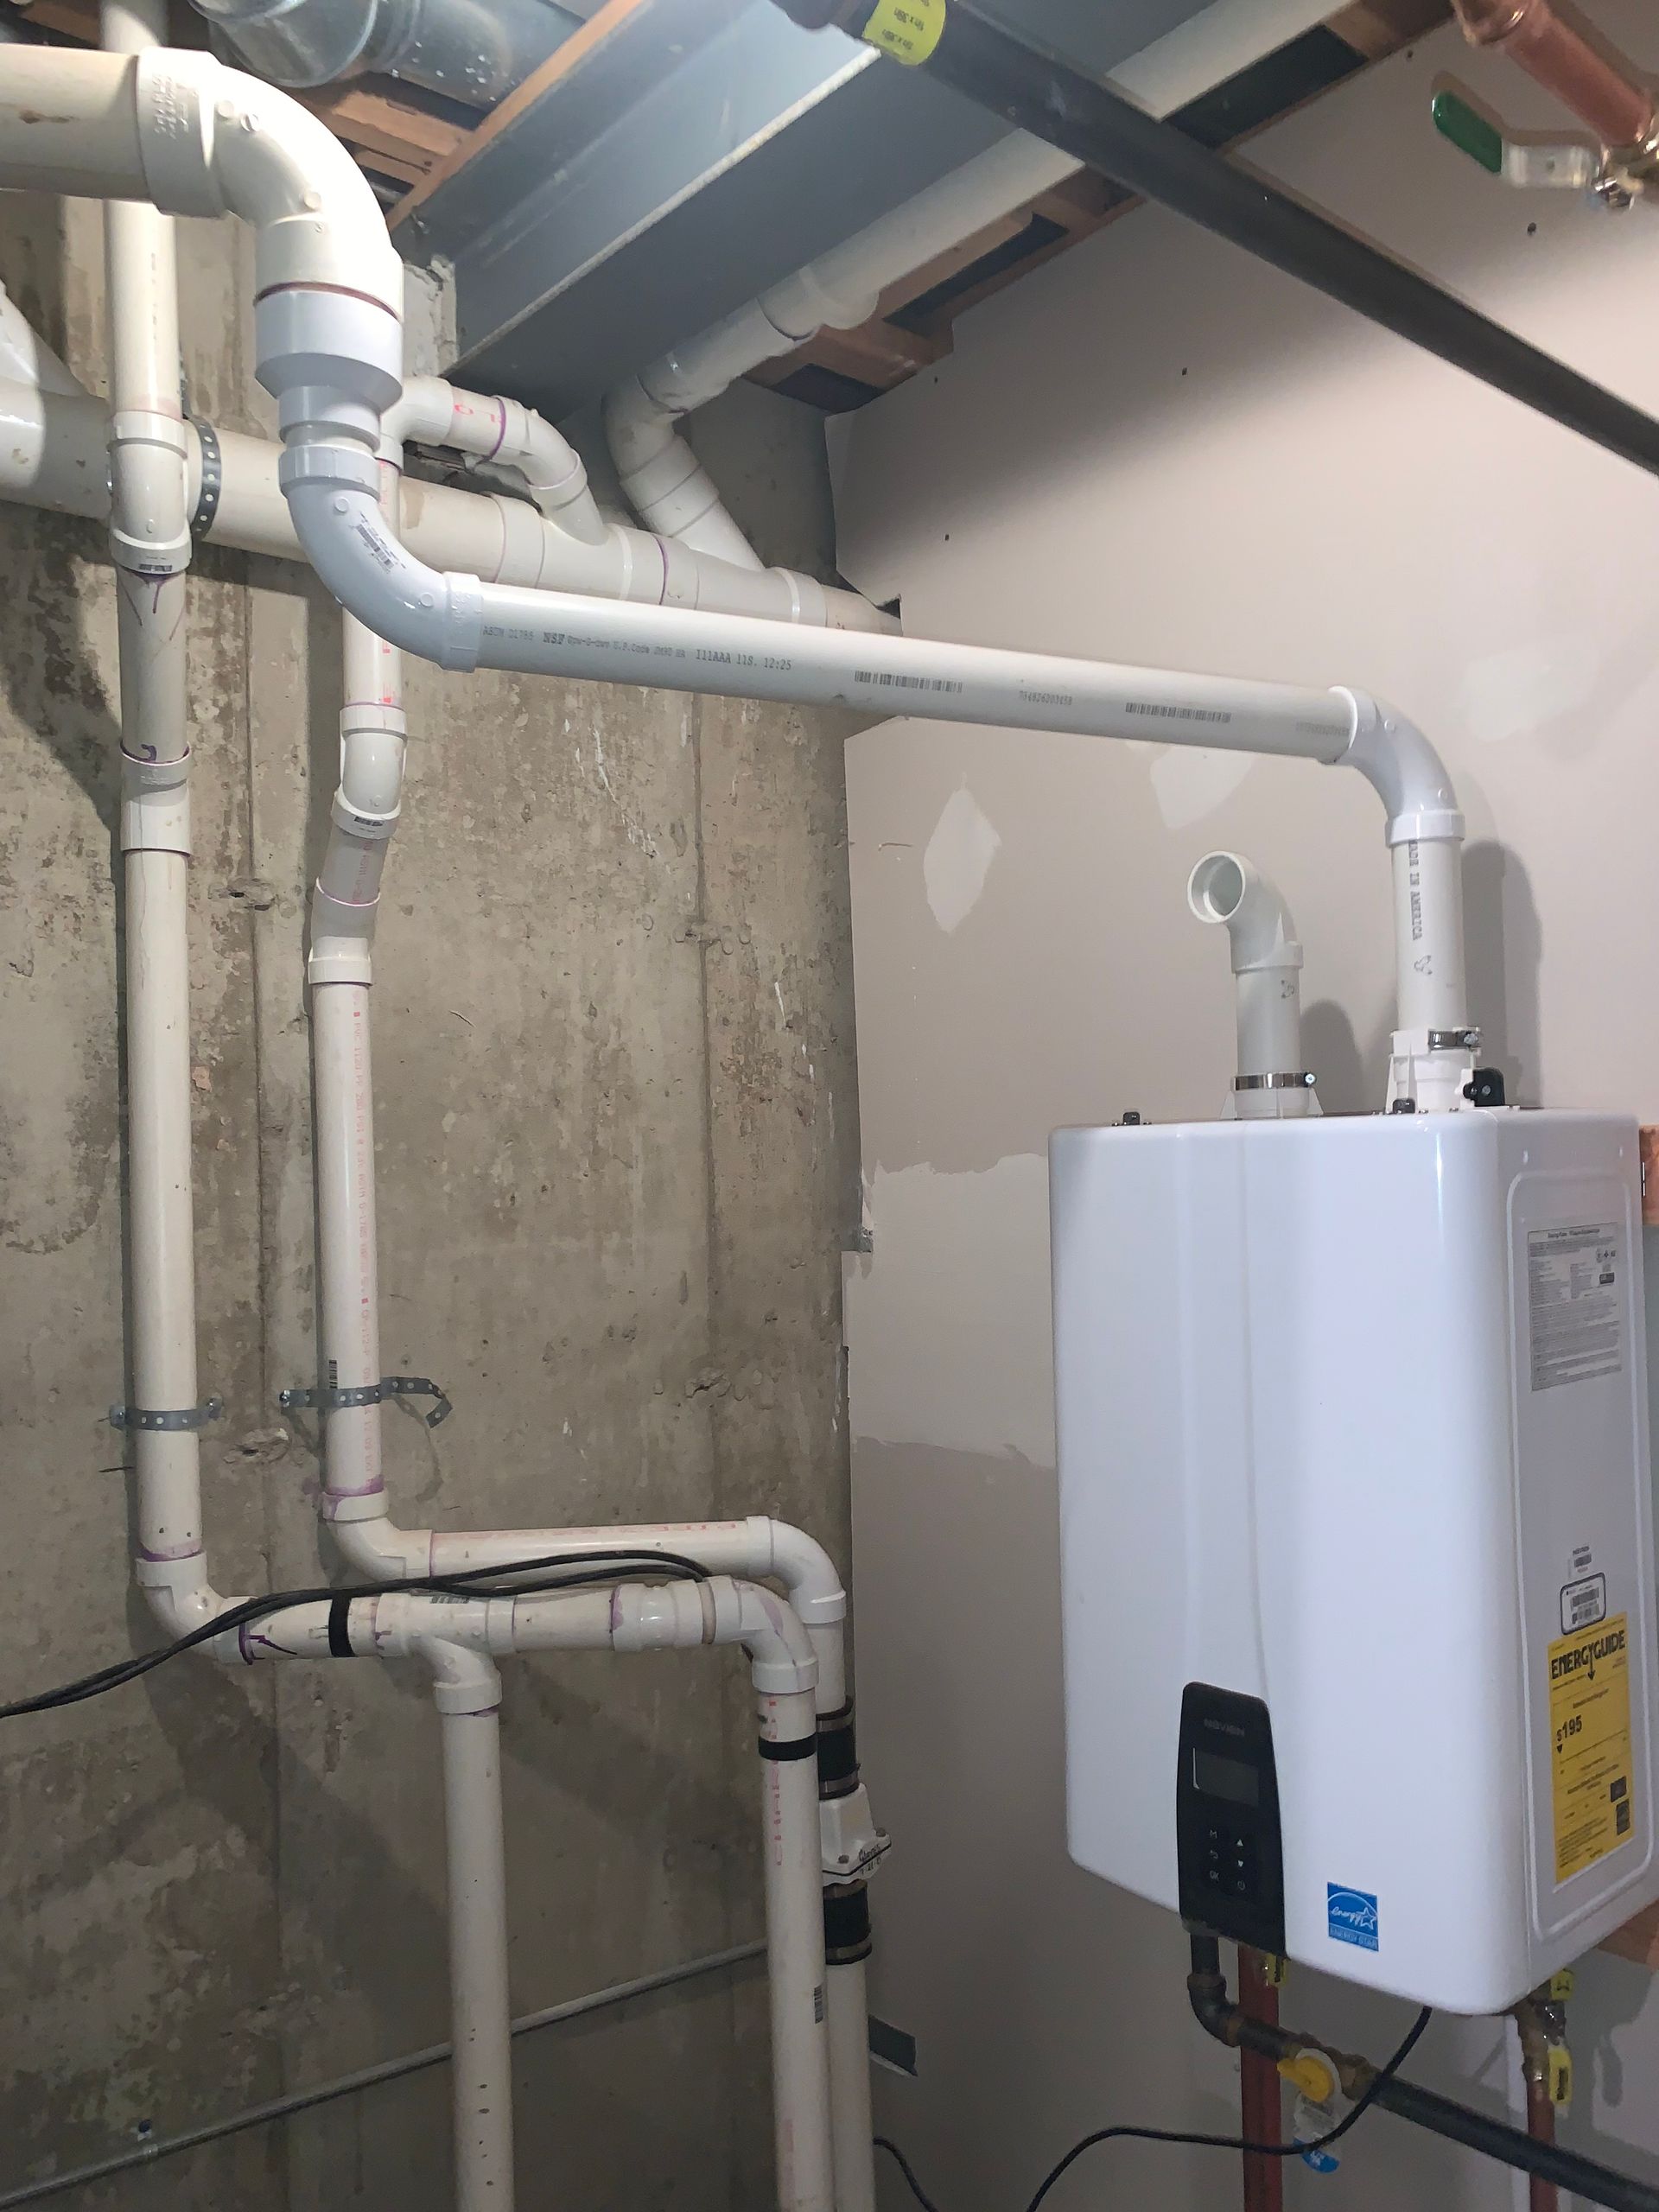 Bensenville Tankless Water Heater Installation in Basement